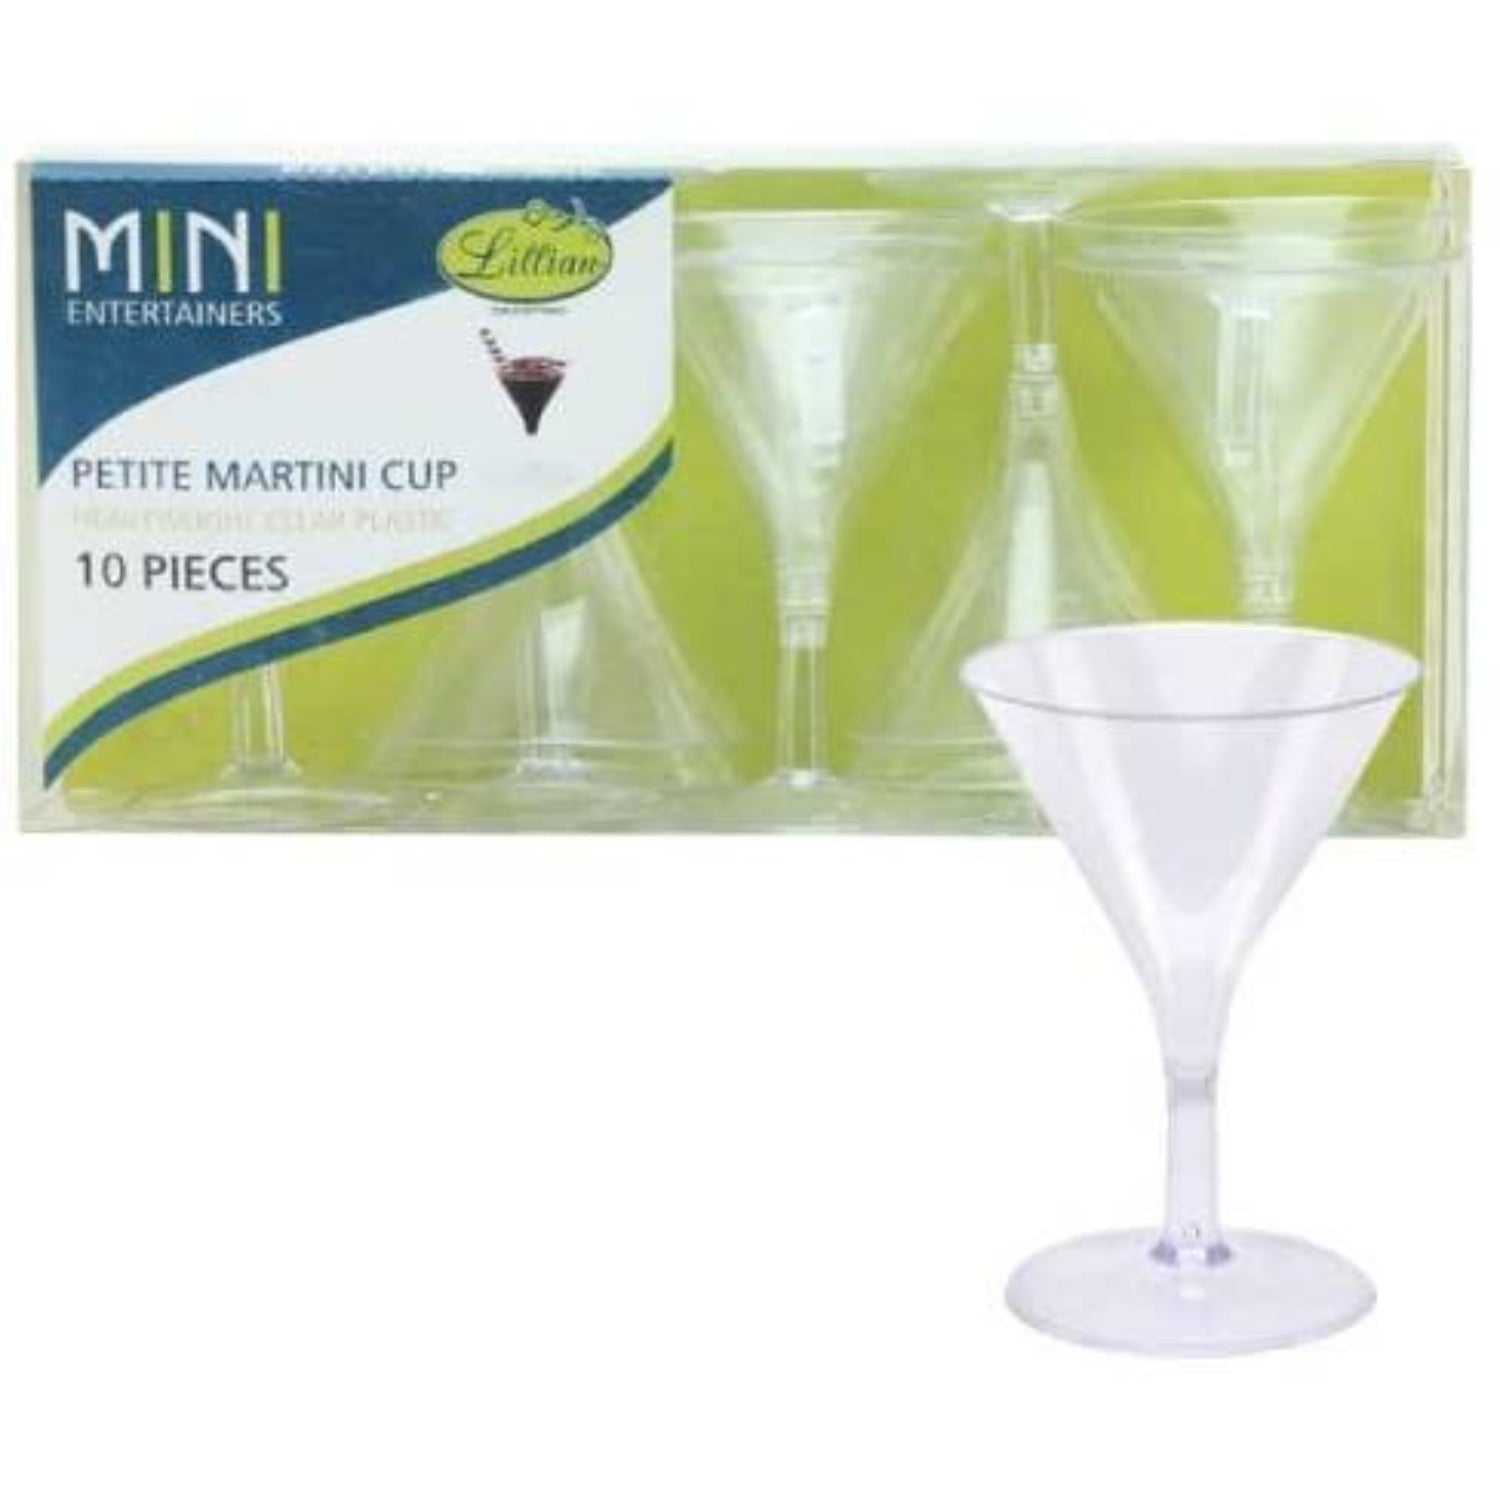 Clear Plastic Martini Glass